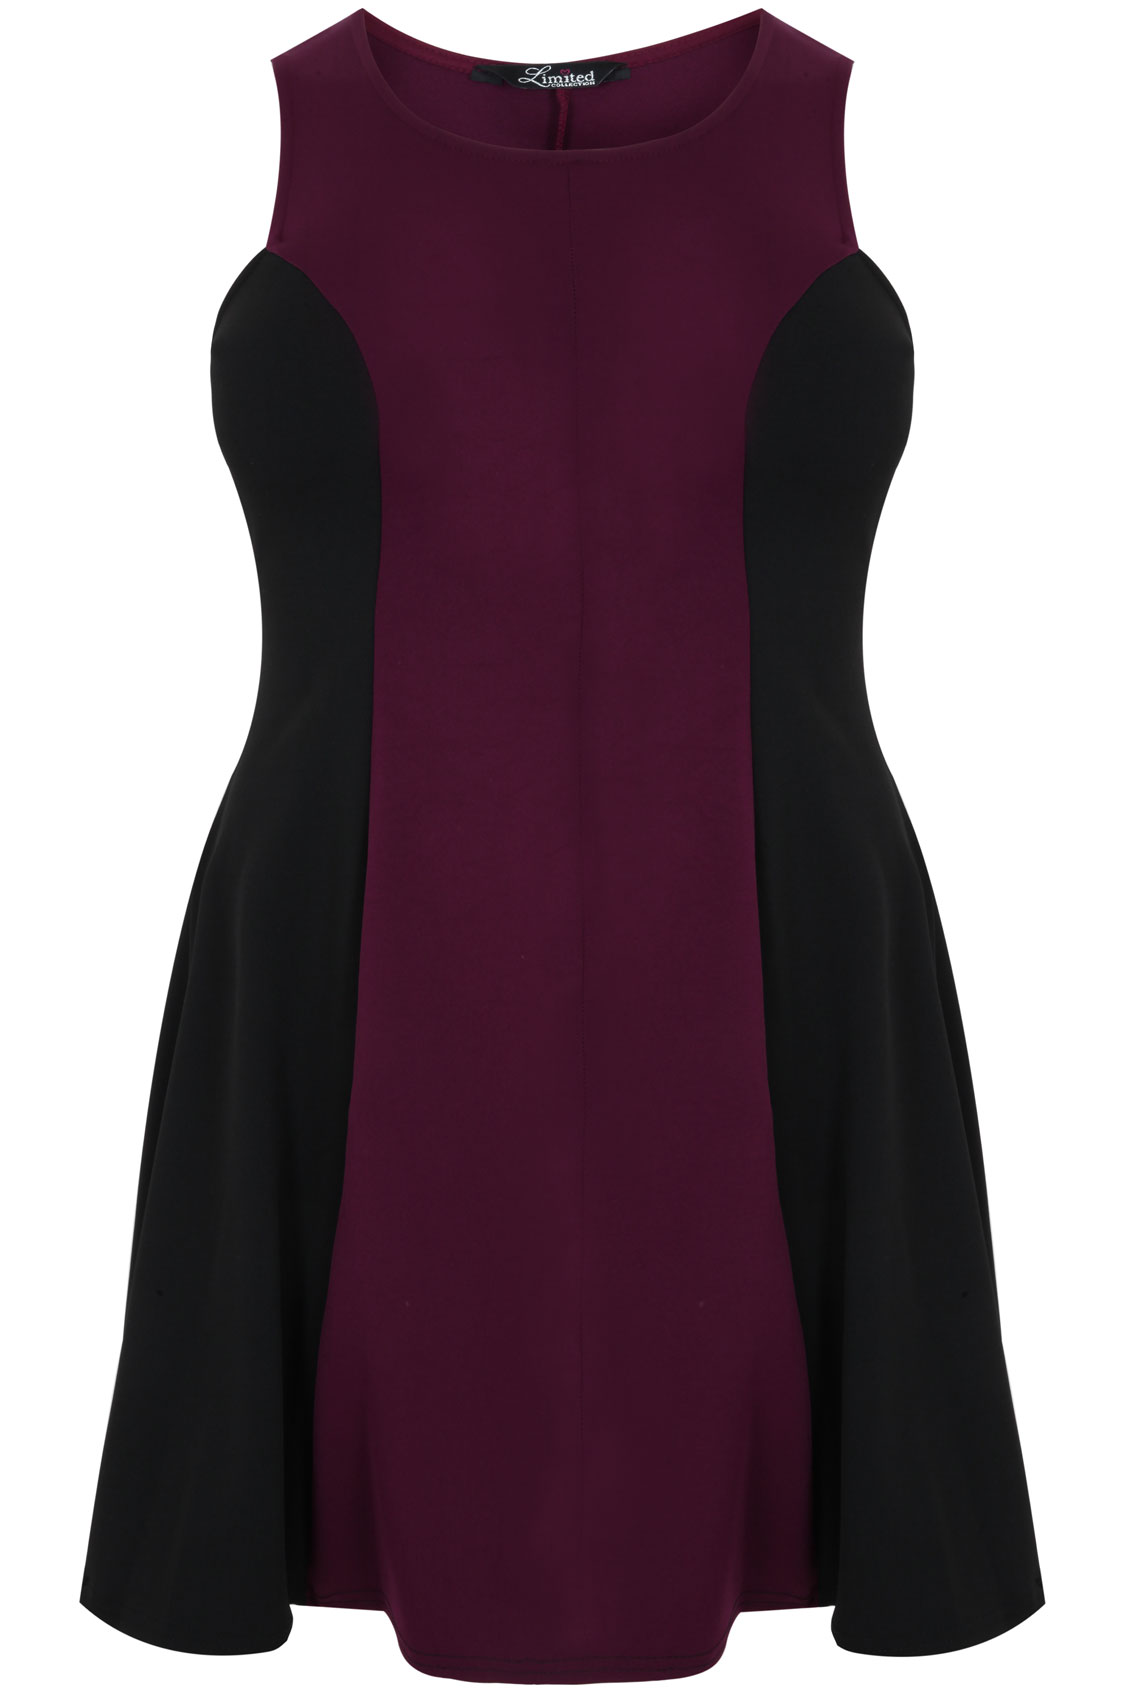 Wine & Black Colour Block Sleeveless Skater Dress Plus Size 14 to 32